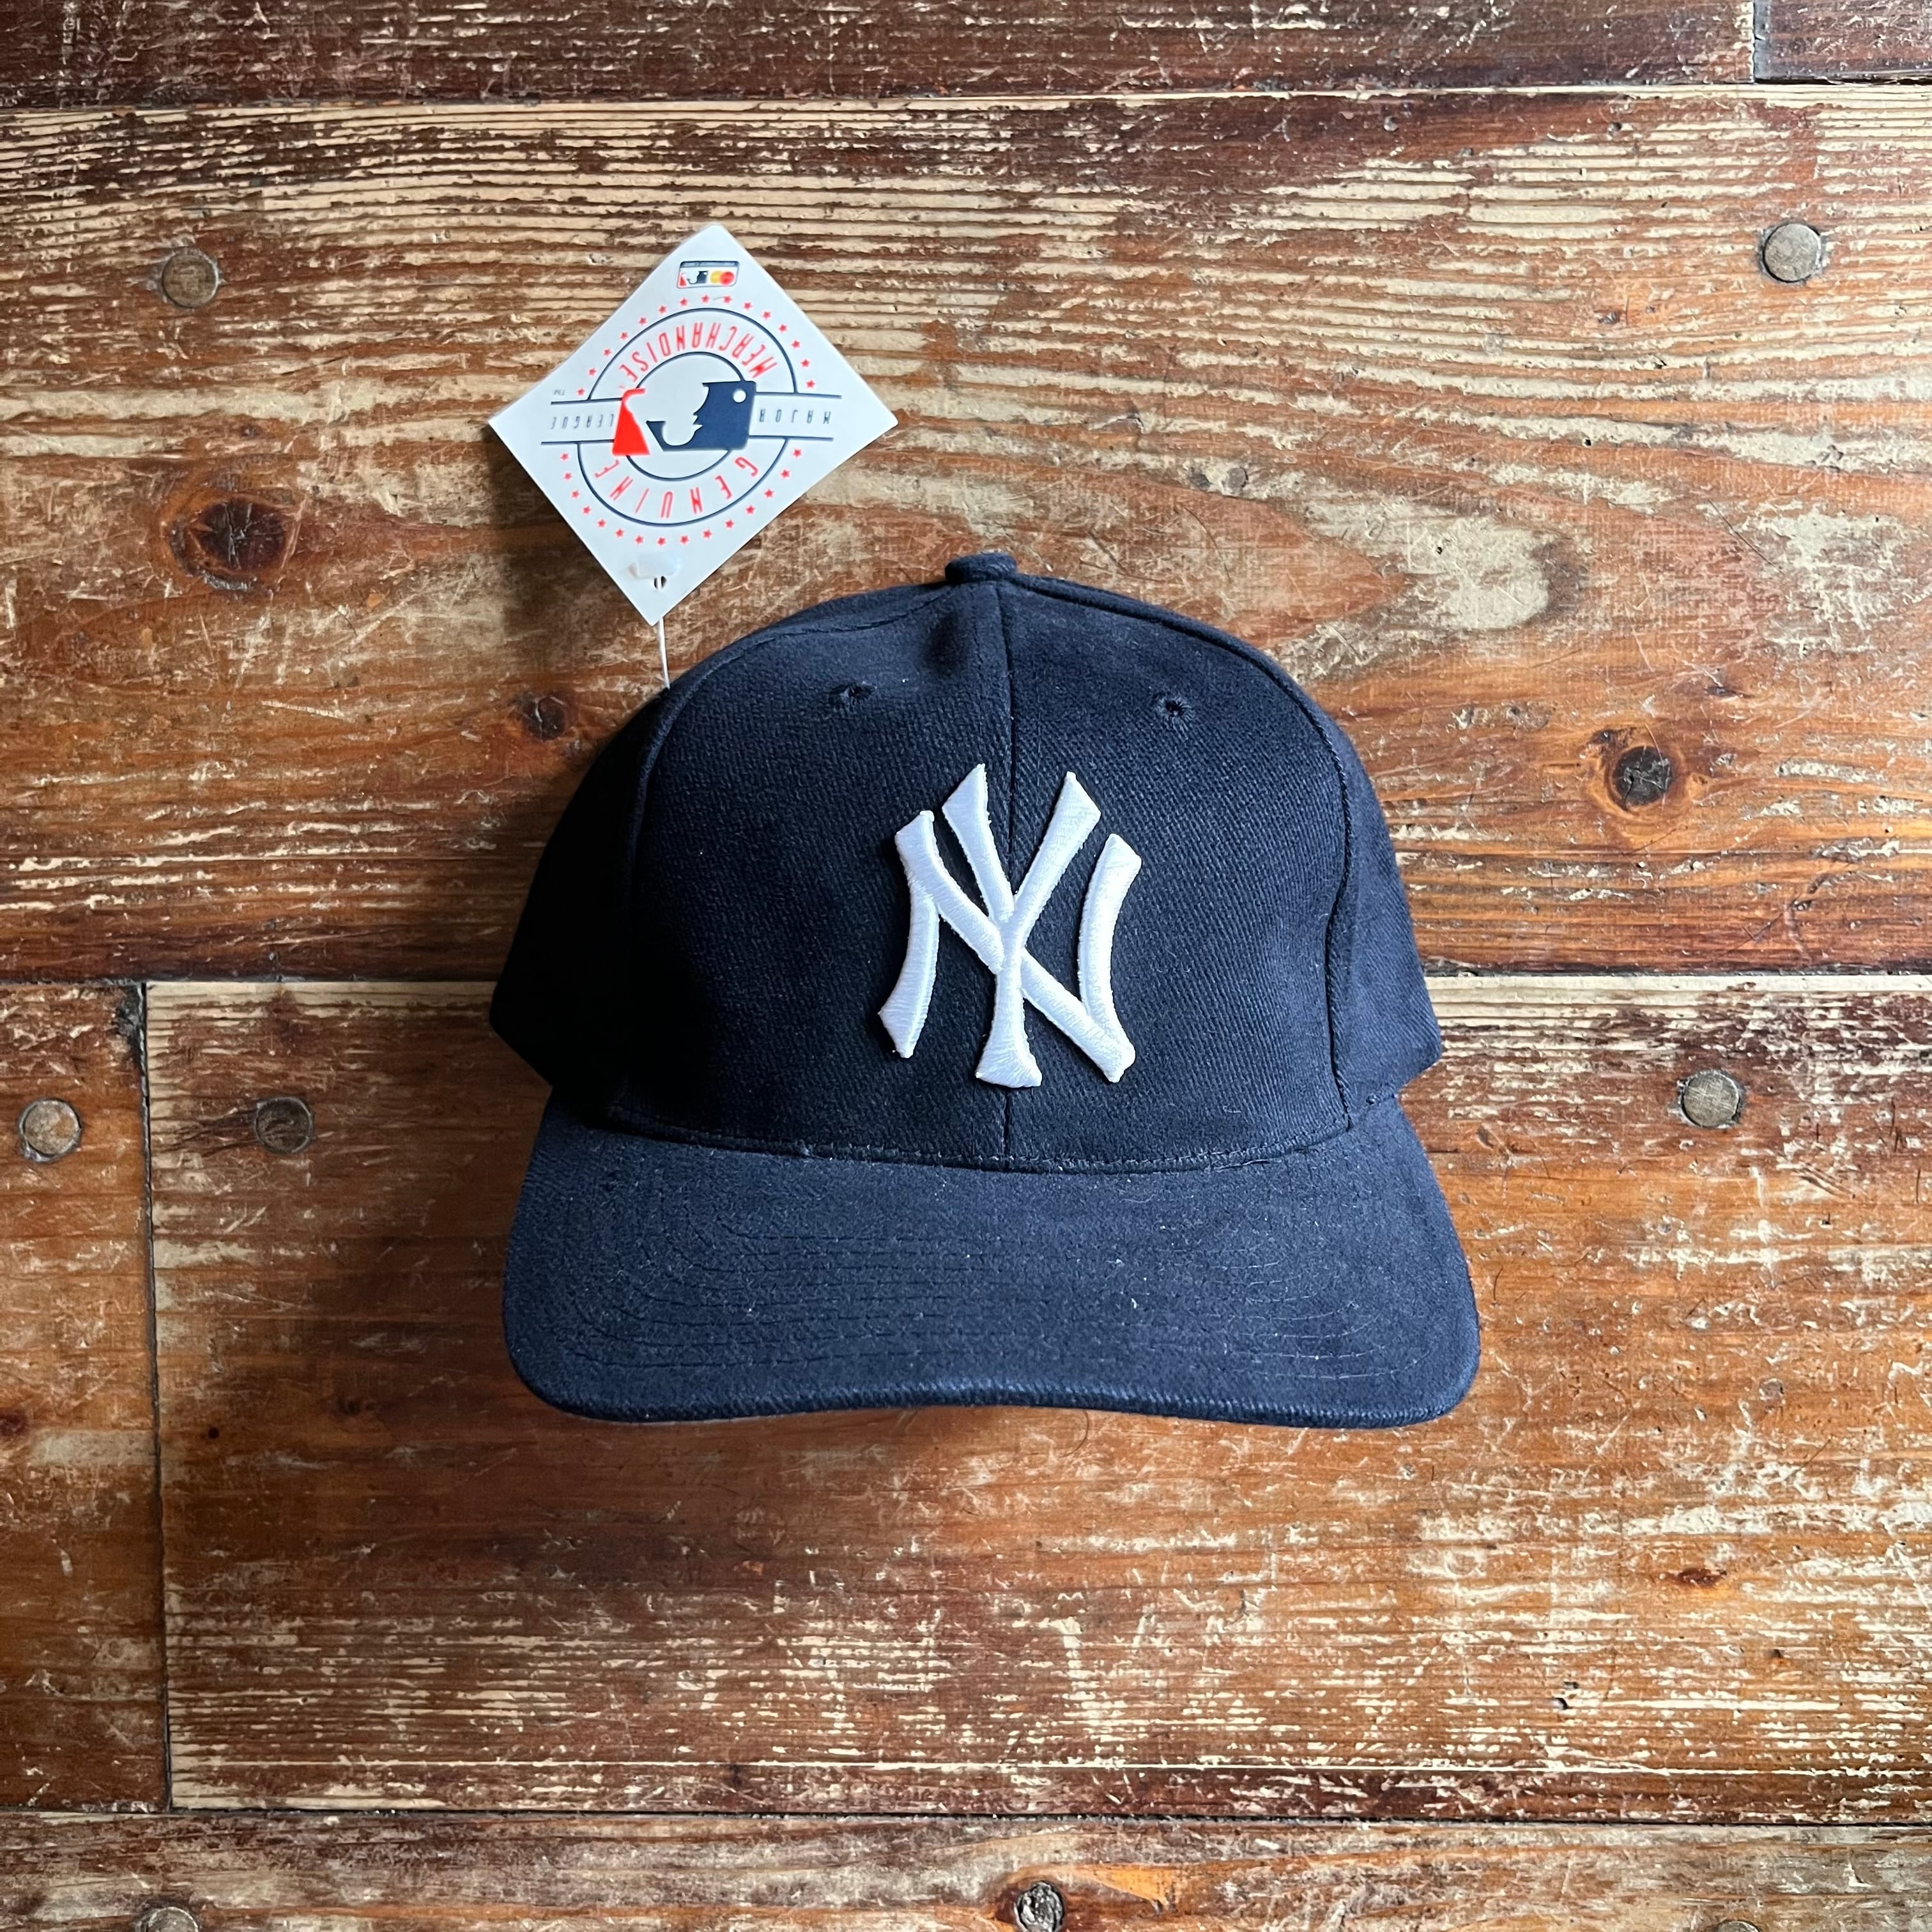 Back In Stock! DEADSTOCK! 90's NY Yankees Baseball Cap by LOGO